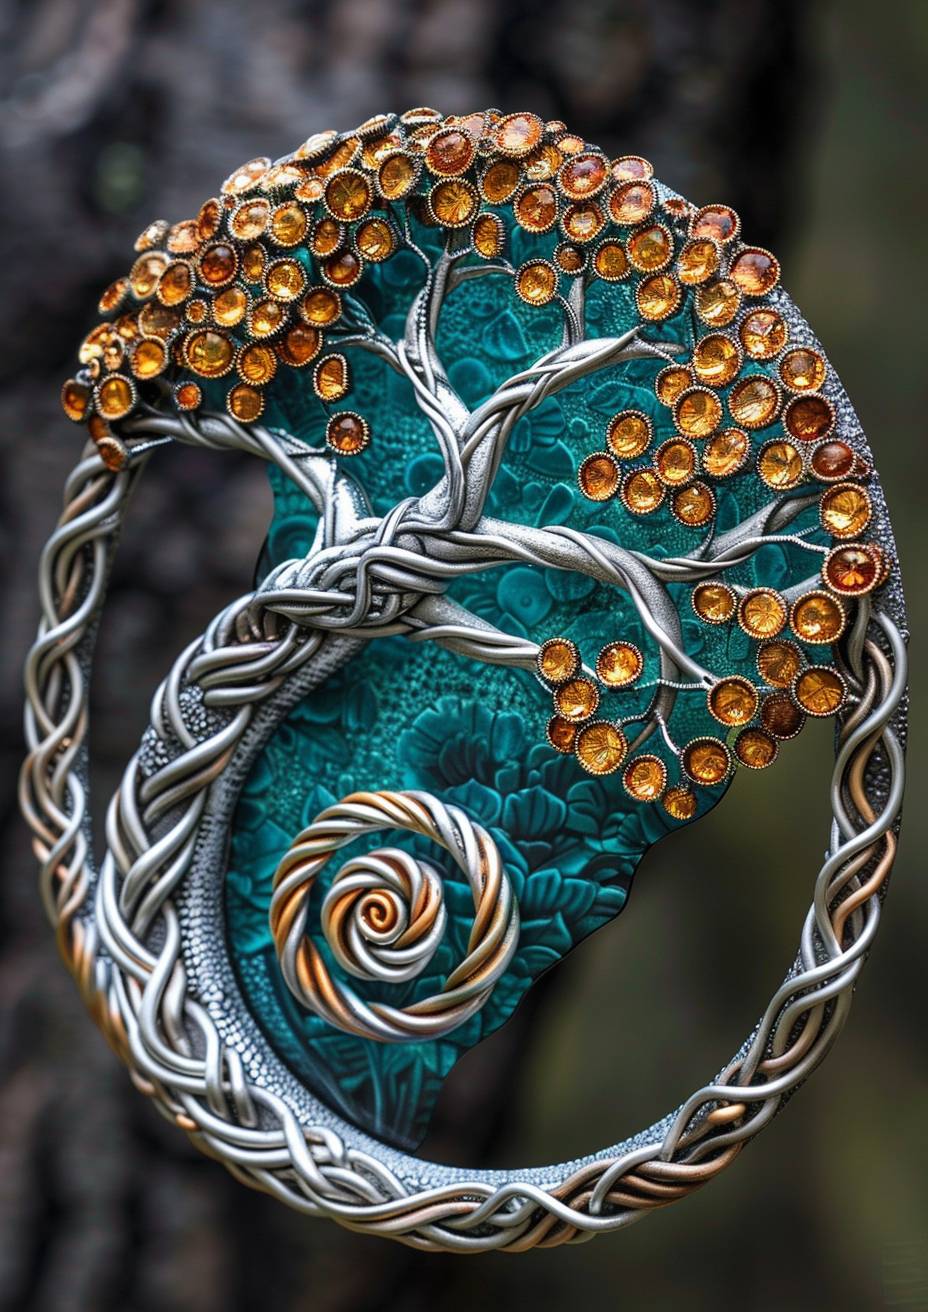 Elaborate Viking knotwork, silver, copper, teal, intricate detail, Fibonacci spiral tree of life, tenebrism, glowing radiant colours